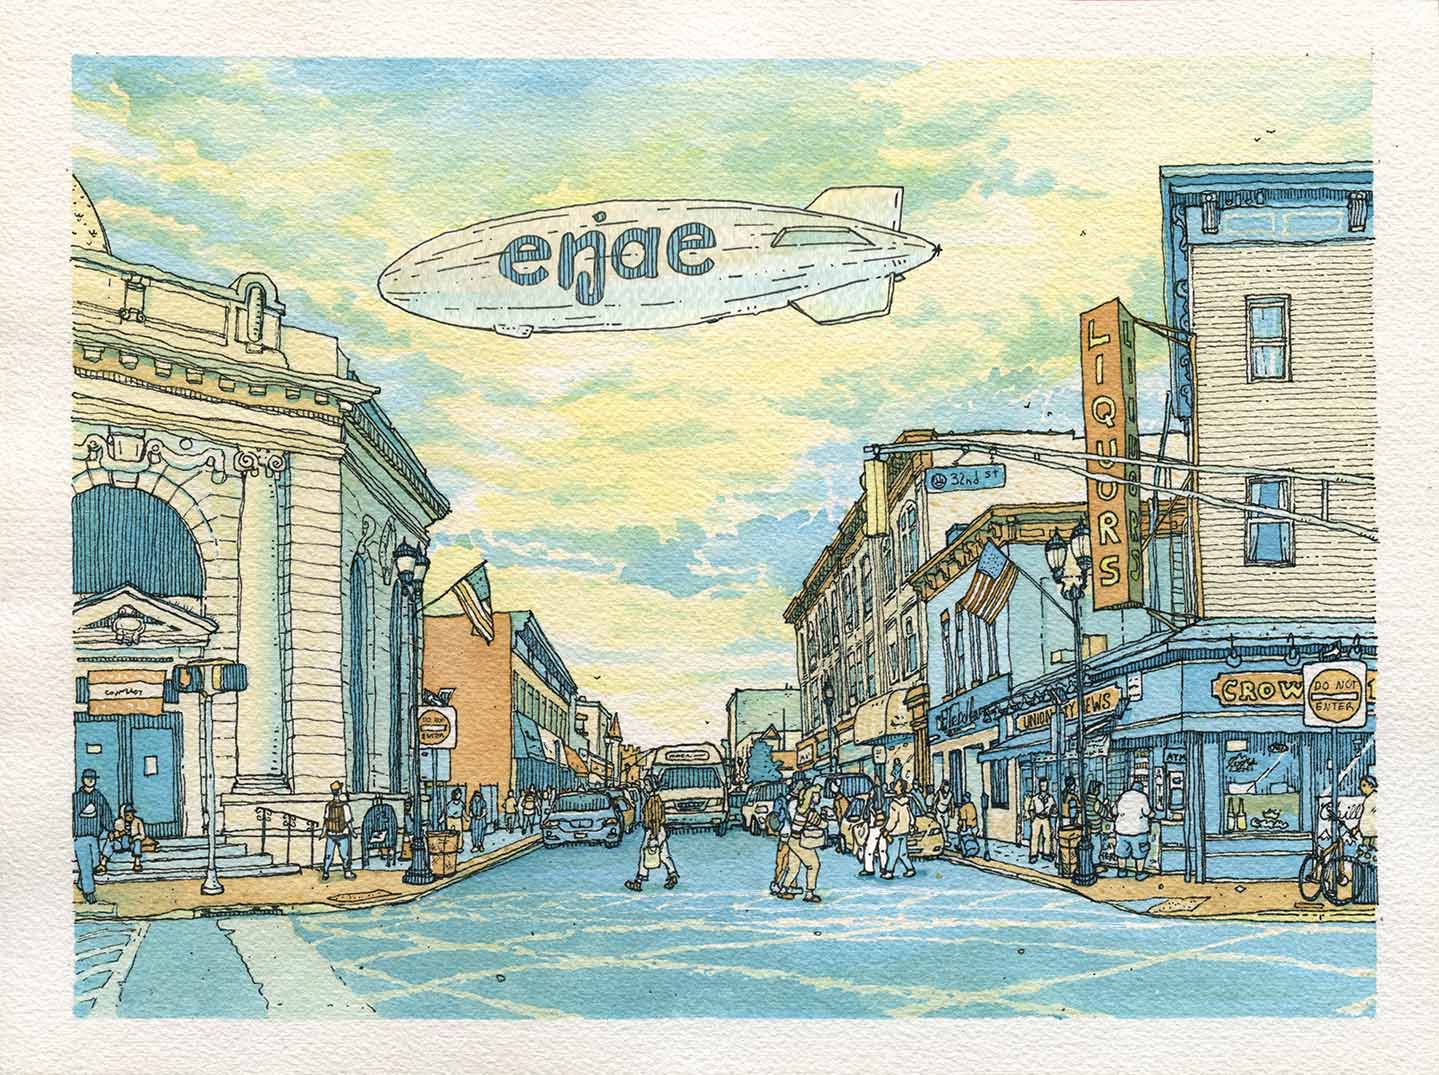 Union City Bergenline Enjae Blimp Zeppelin